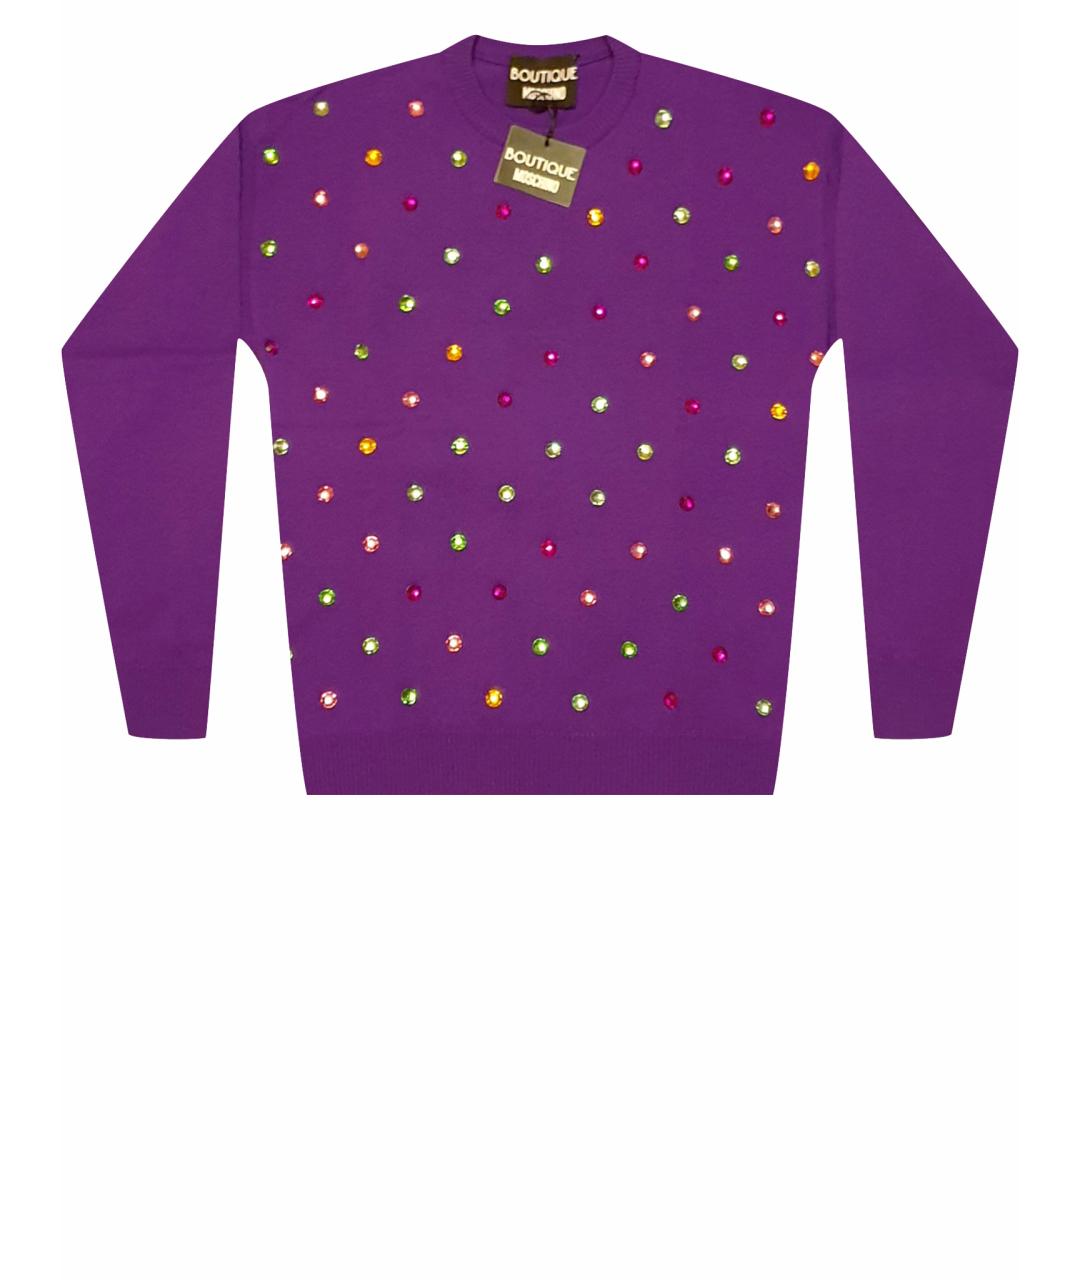 BOUTIQUE MOSCHINO Фиолетовый шерстяной джемпер / свитер, фото 1